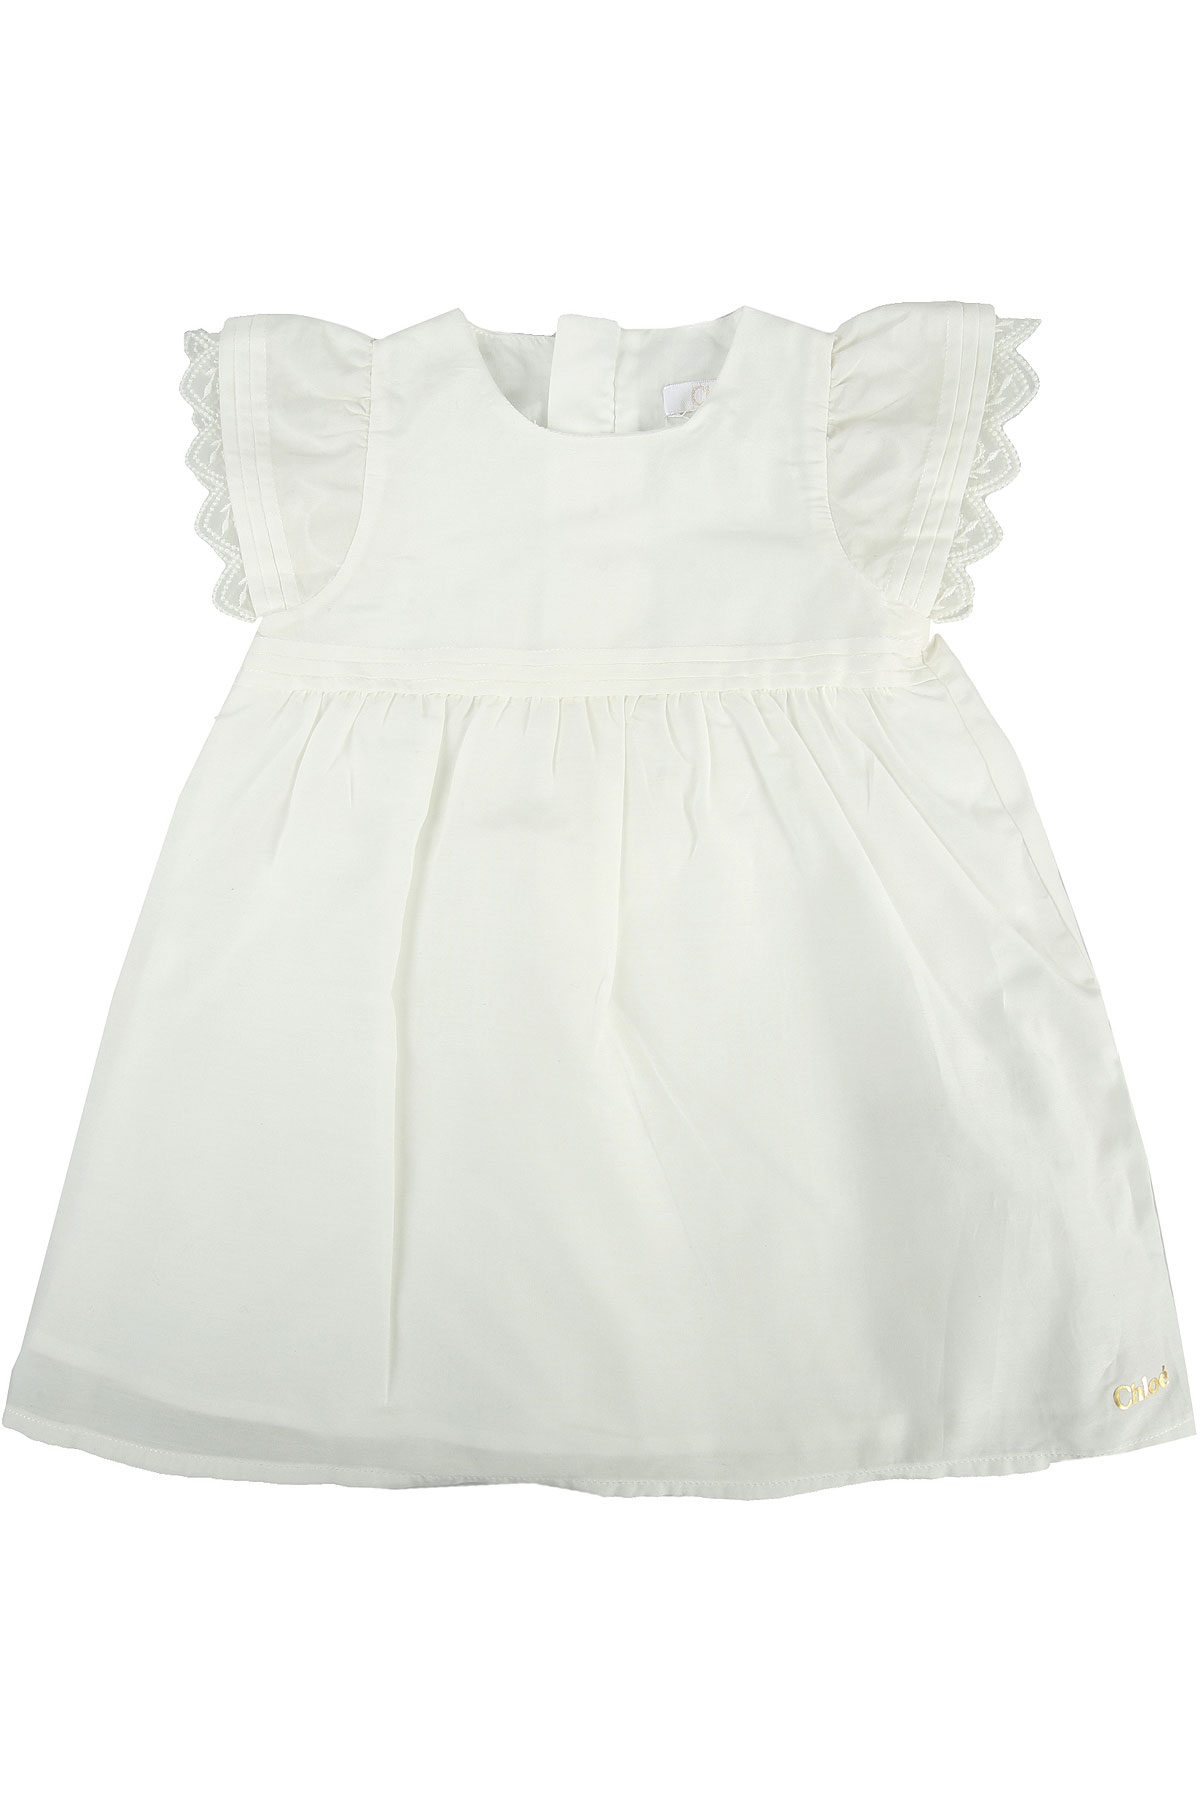 Baby Girl Clothing Chloe, Style code: c02294-117-